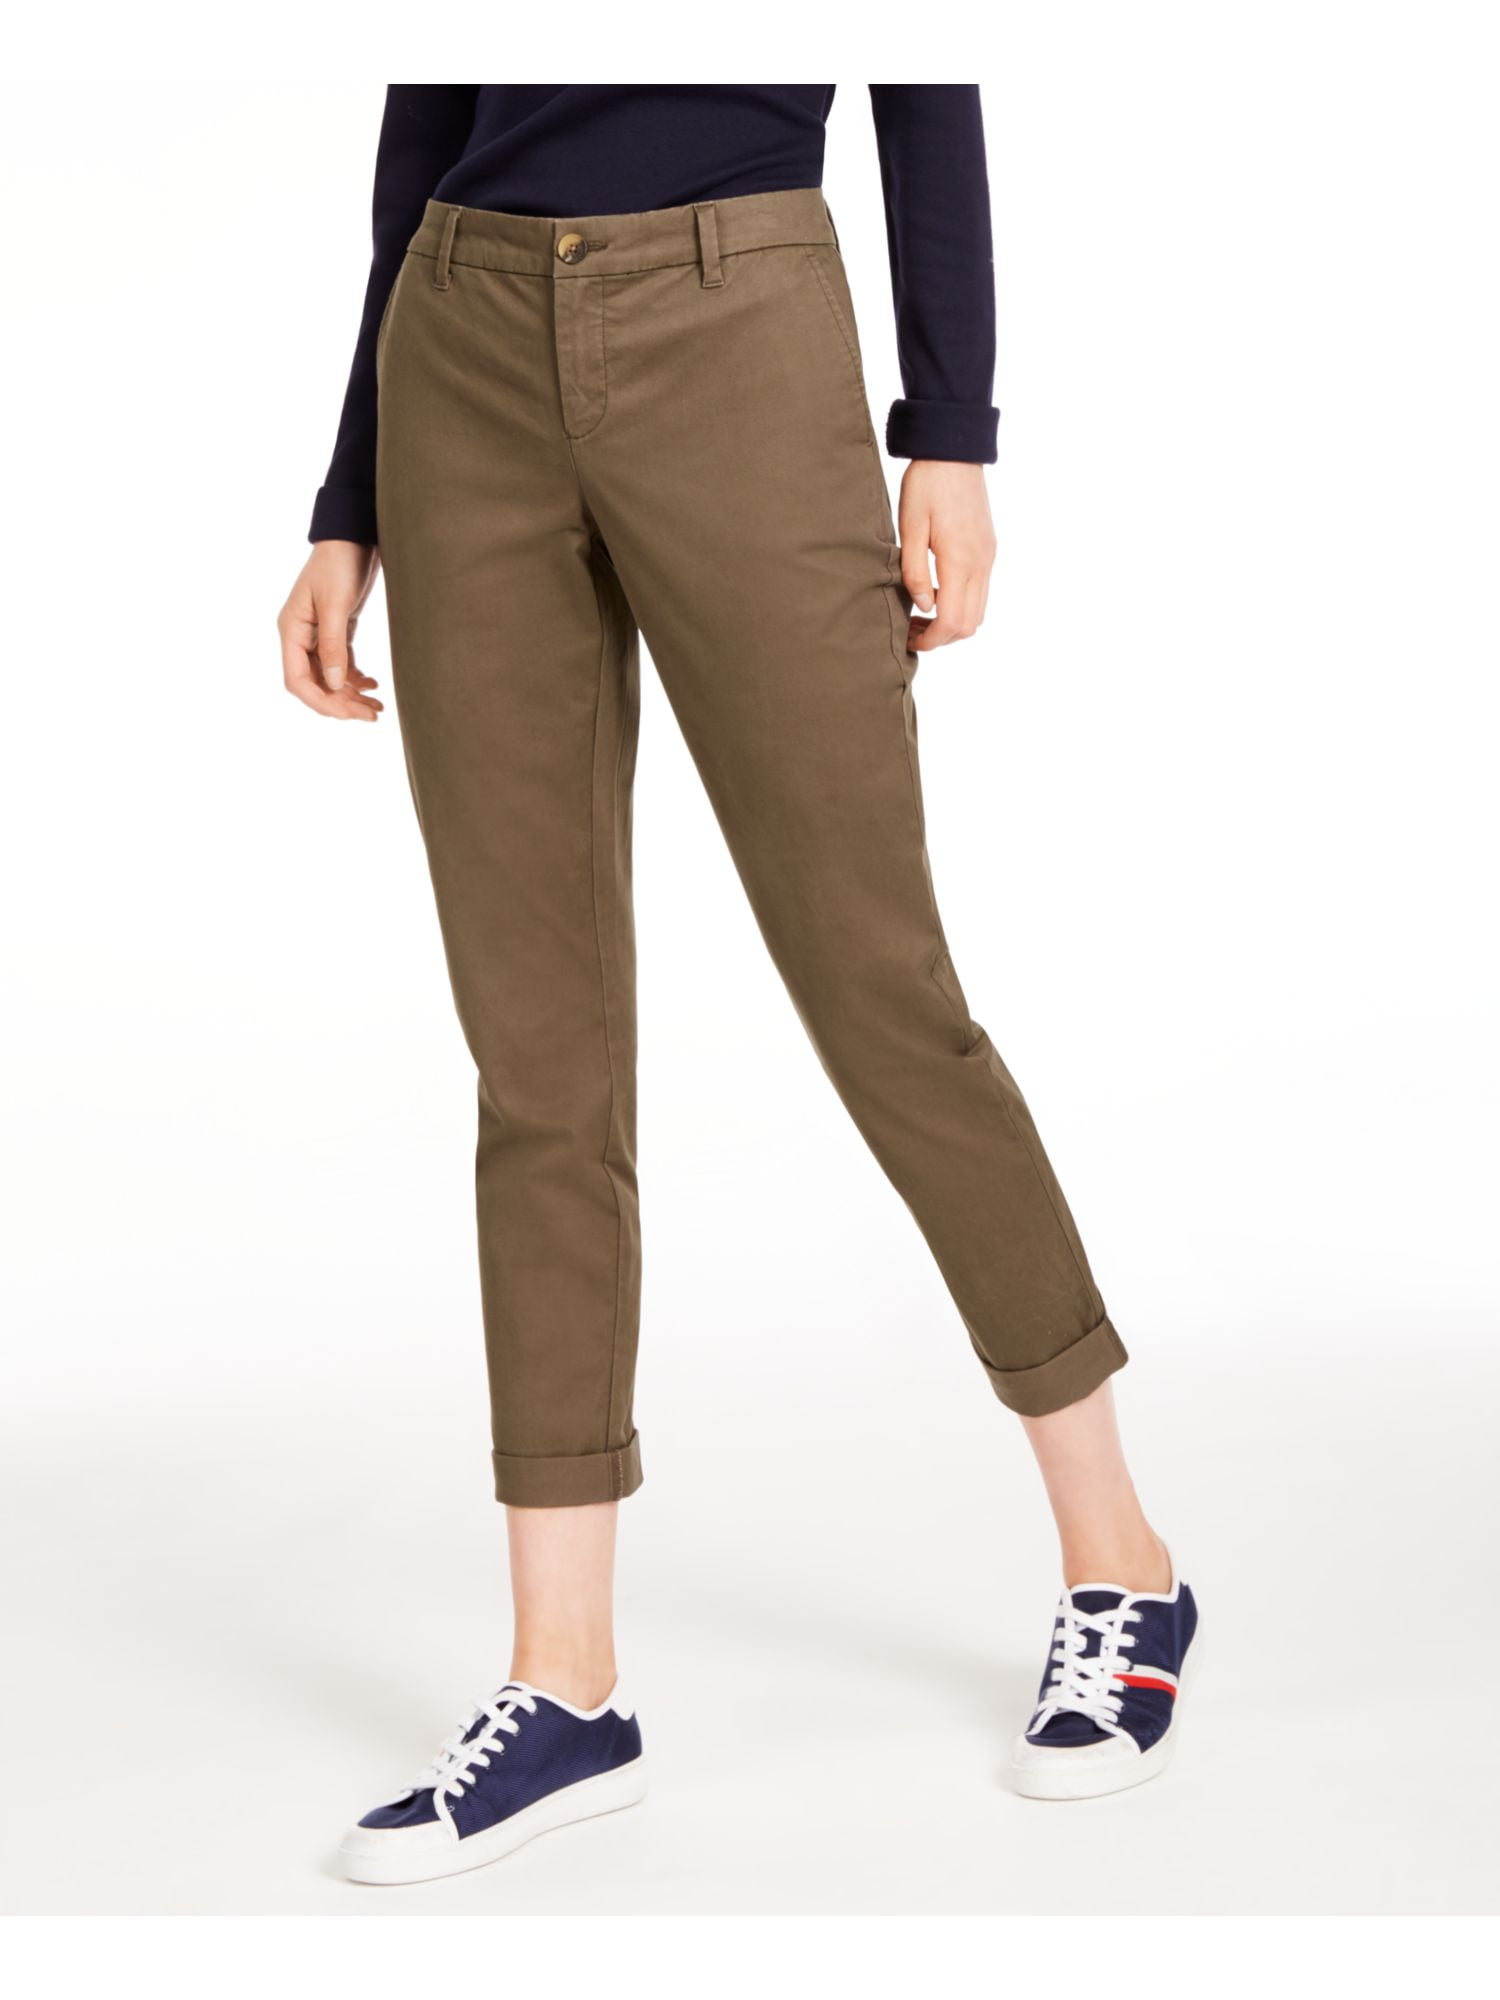 TOMMY HILFIGER Womens Green Capri Pants Size: - Walmart.com